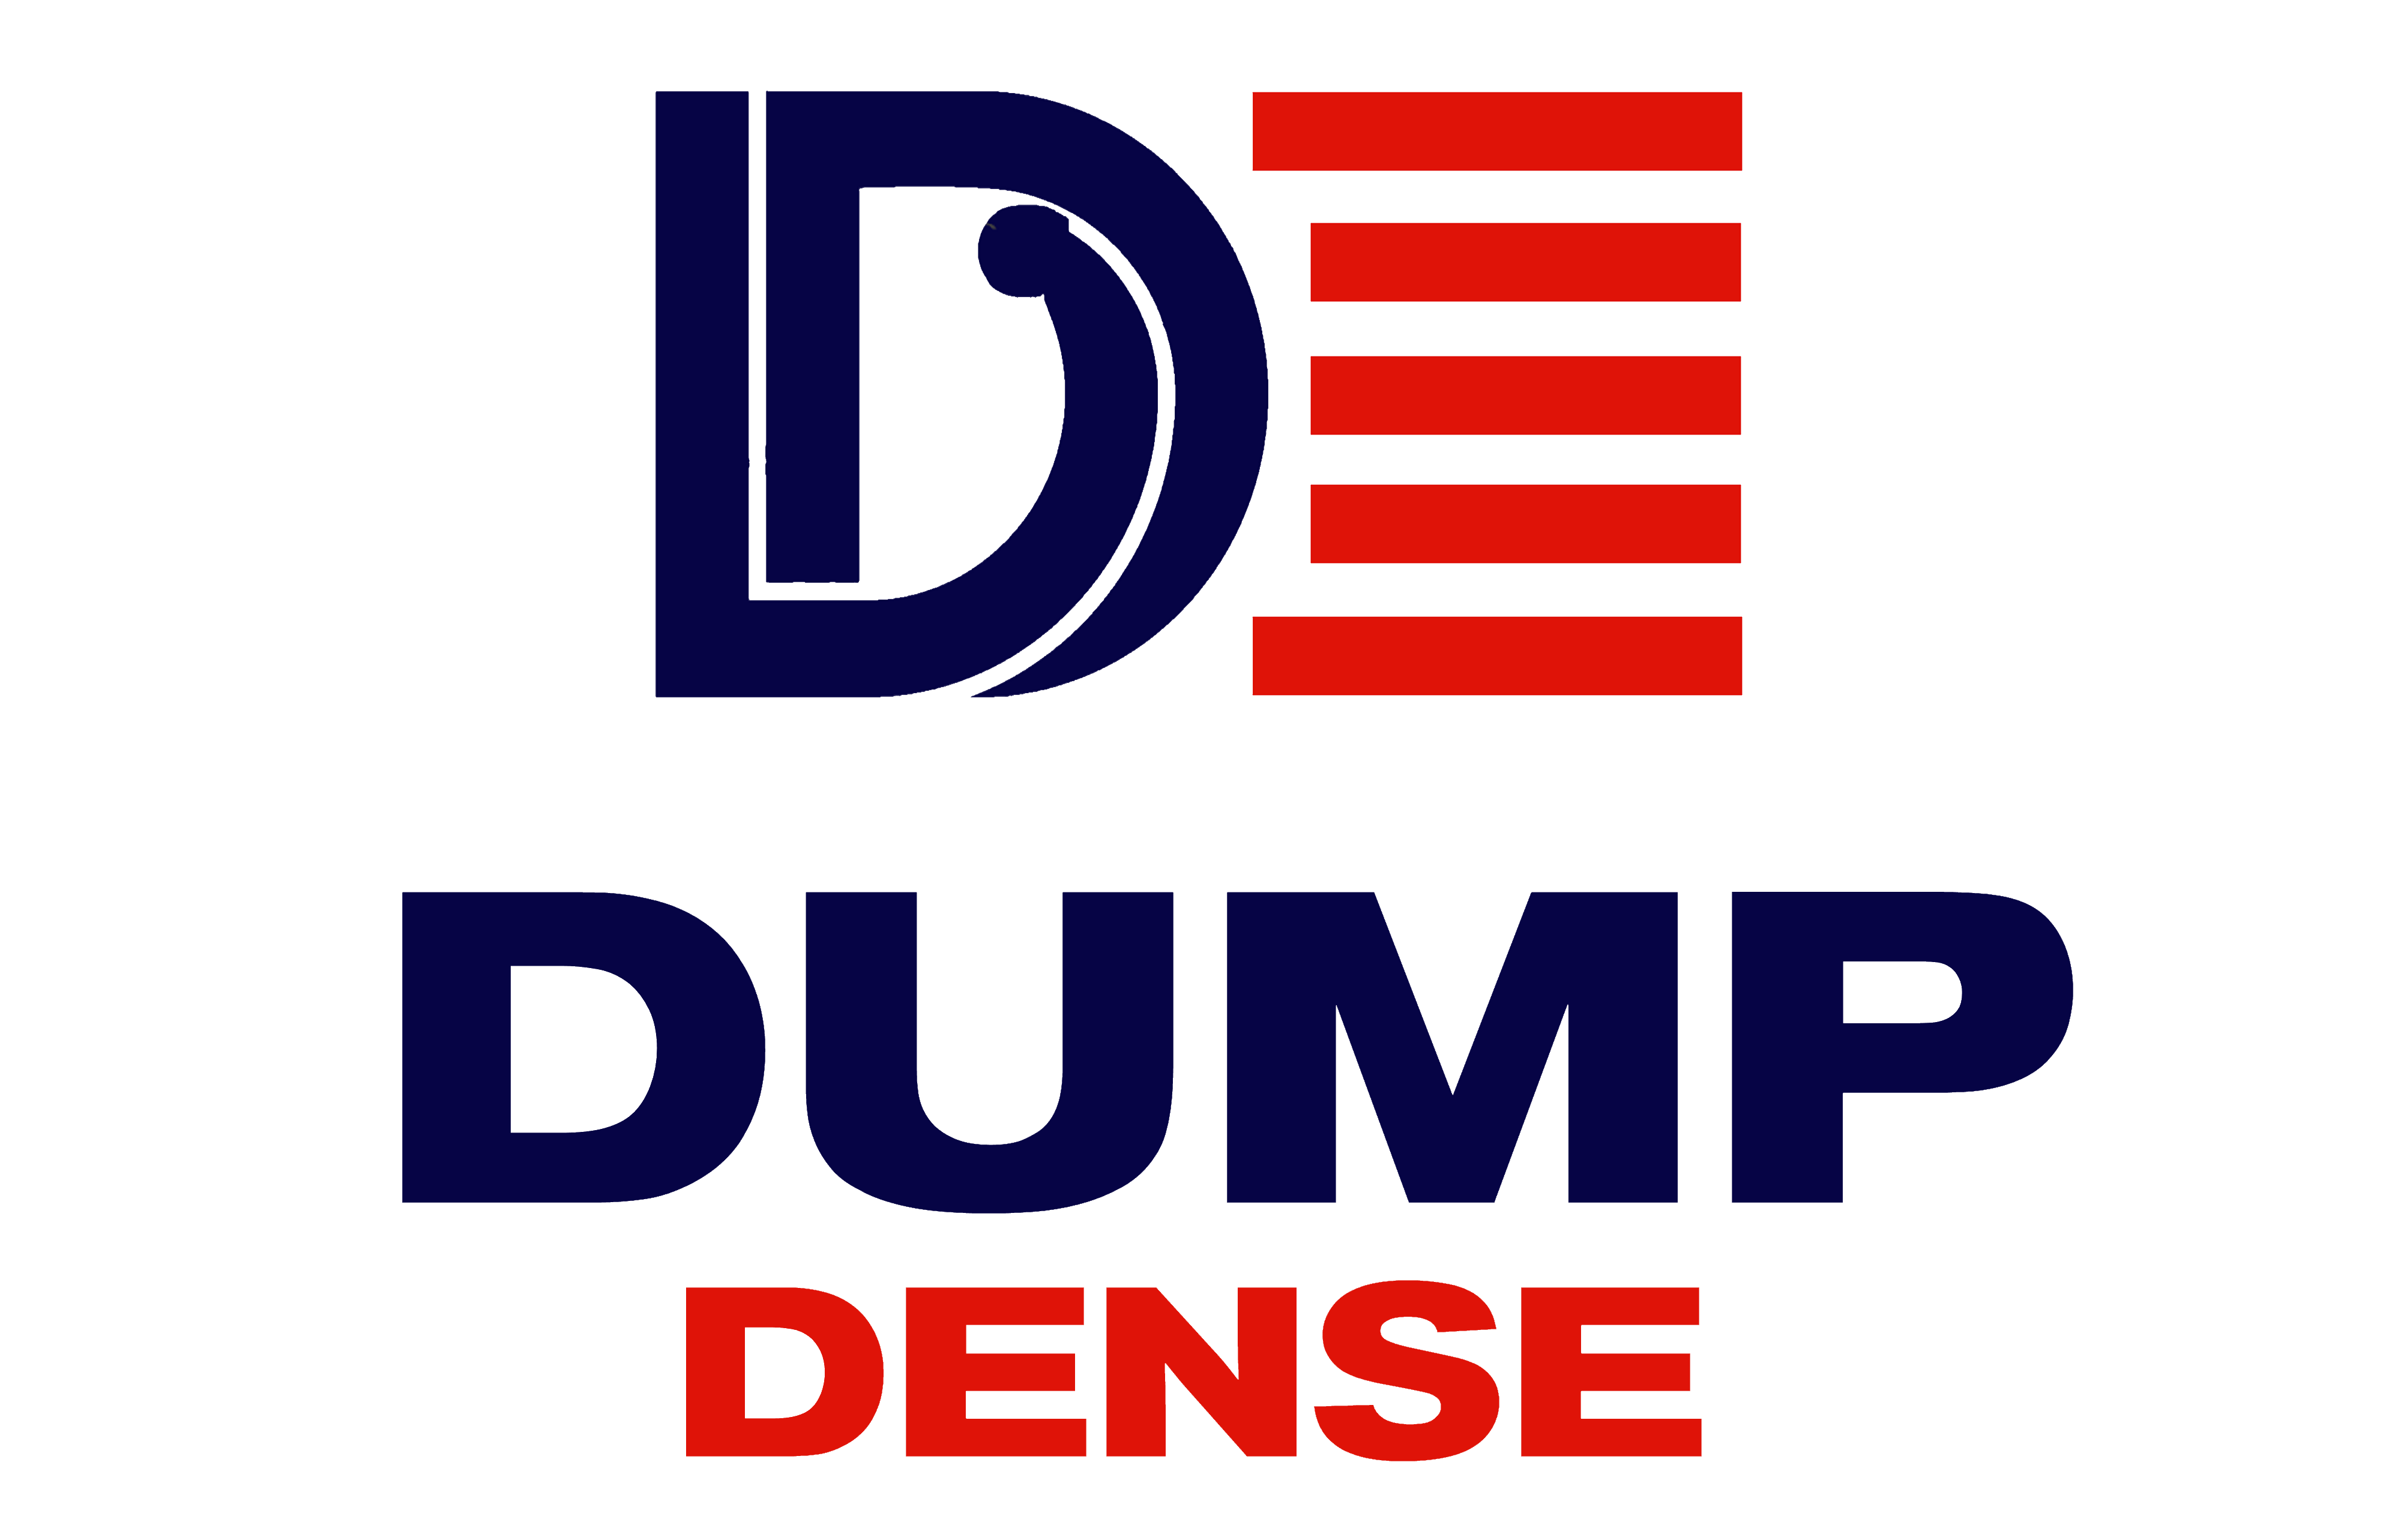 #DumpDense2016